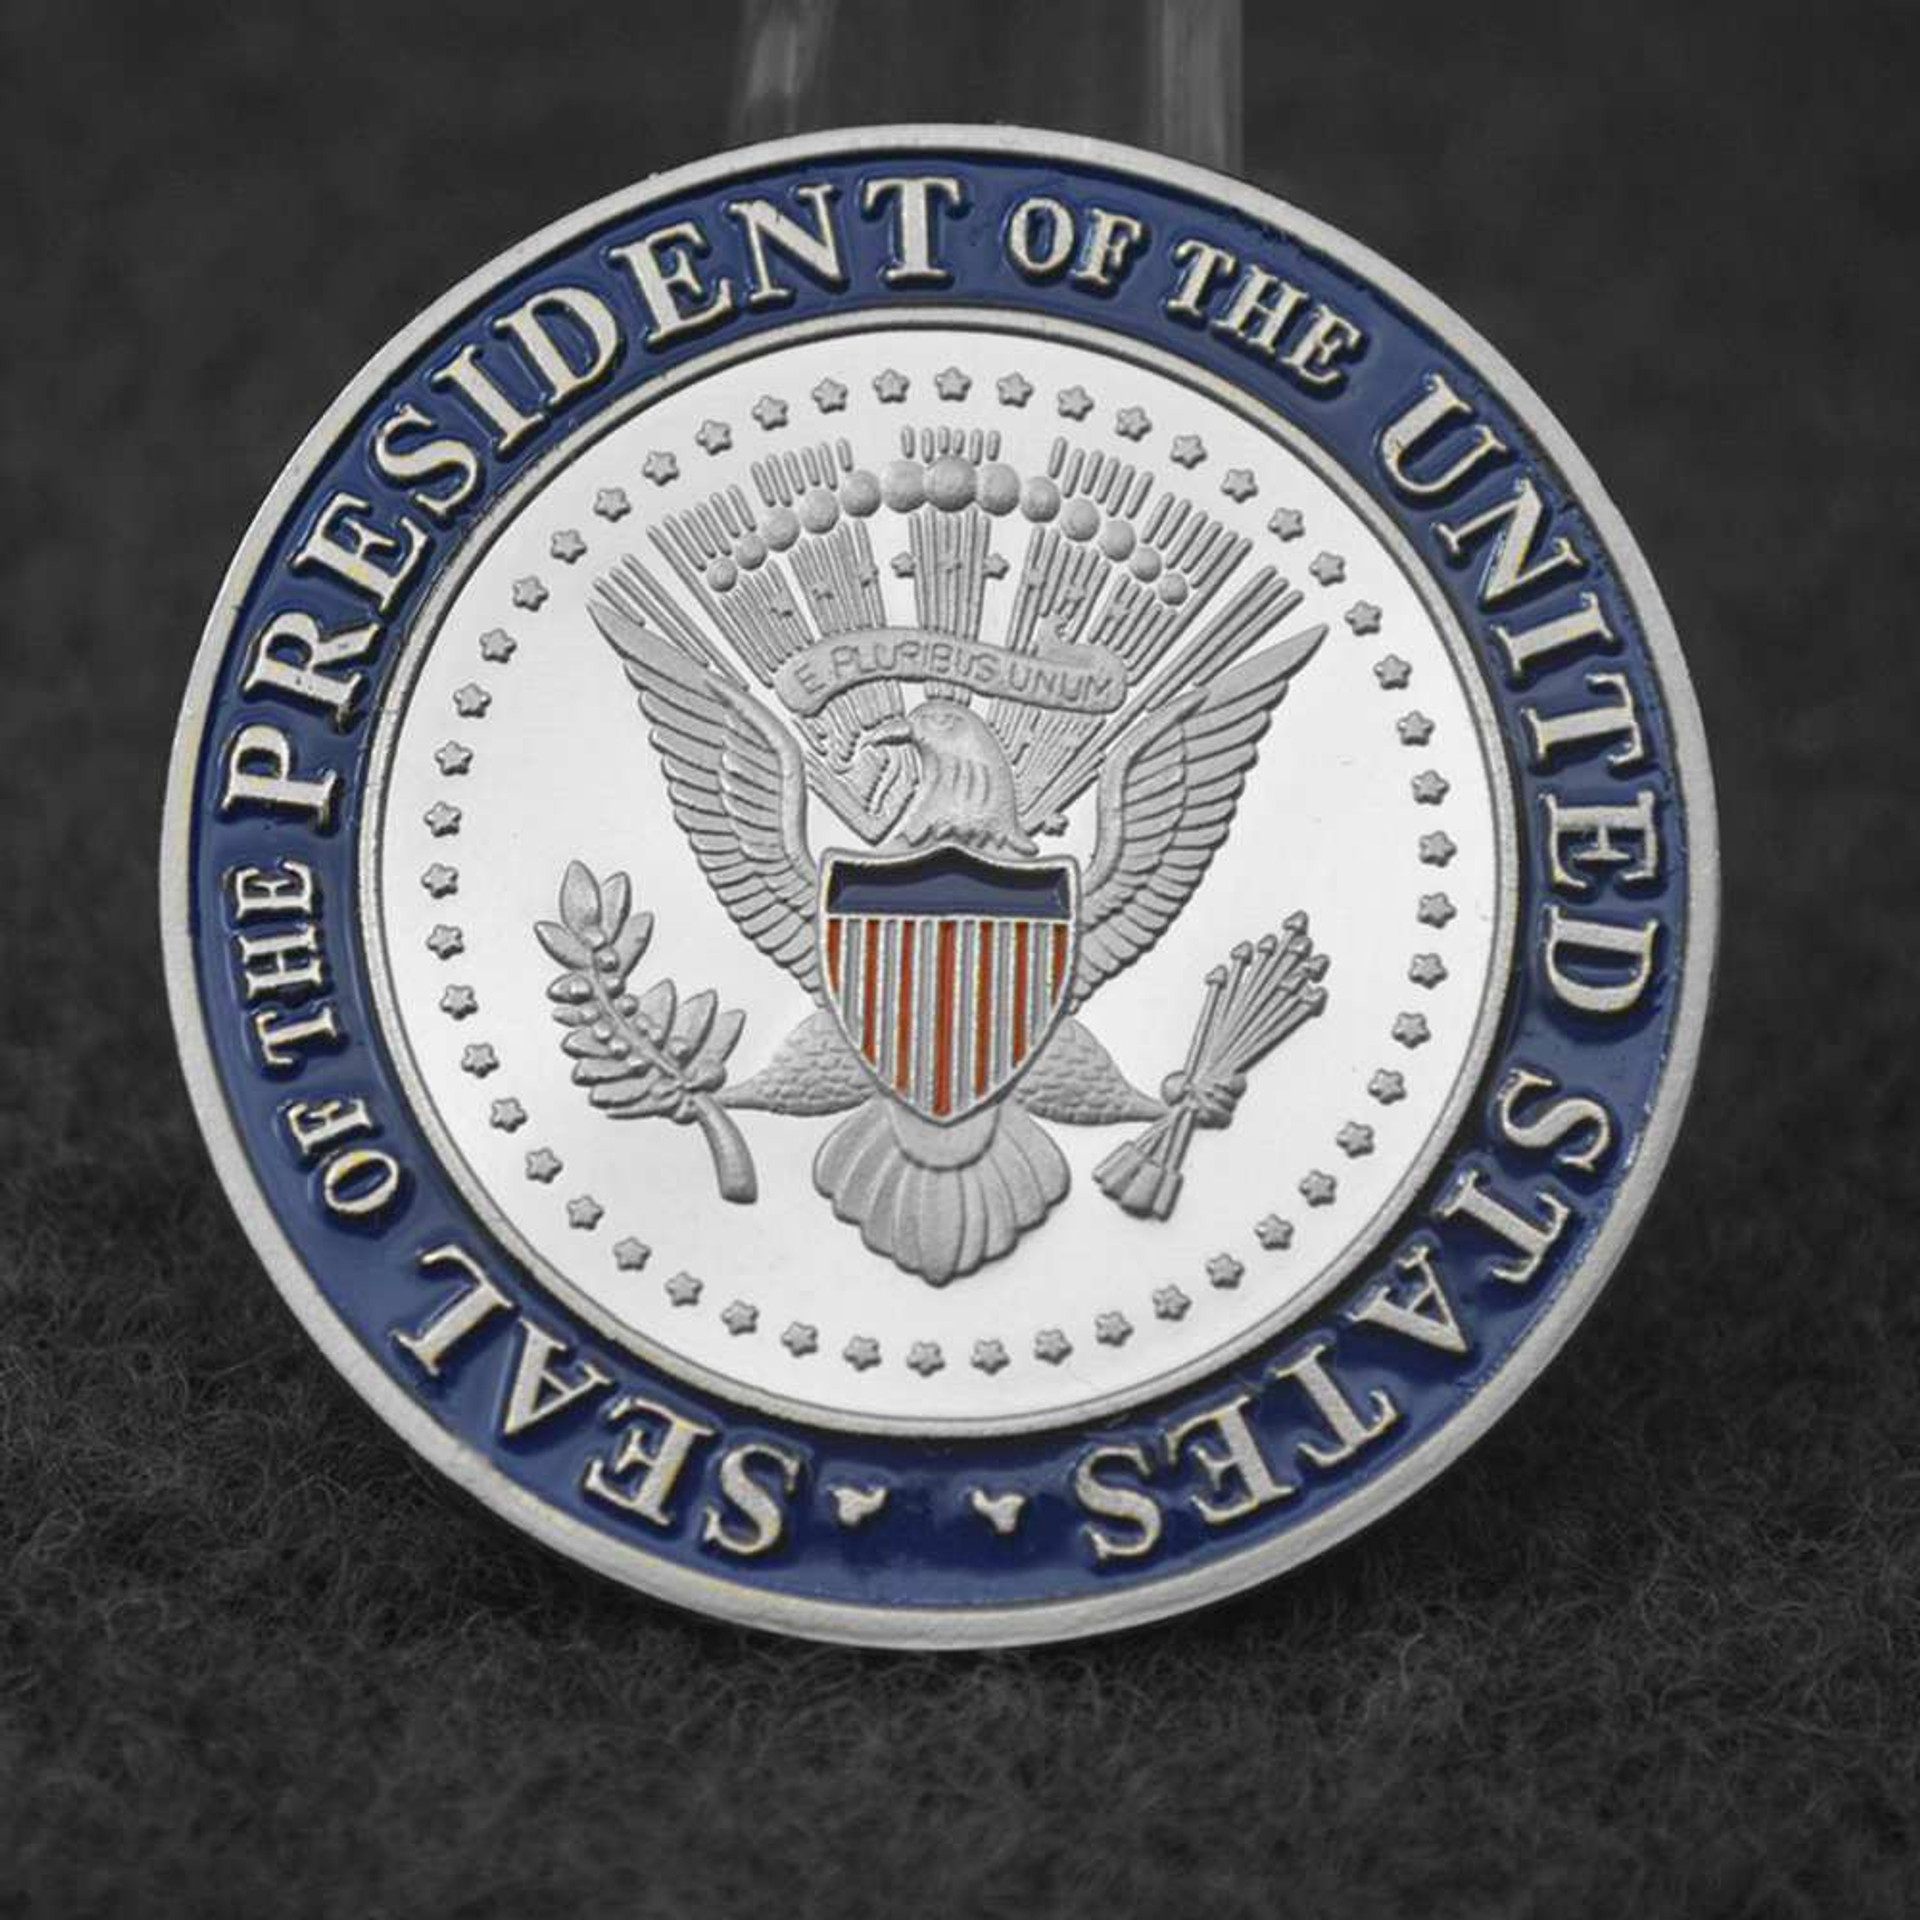 President Joe Biden Challenge Coin - Meach's Military Memorabilia & More